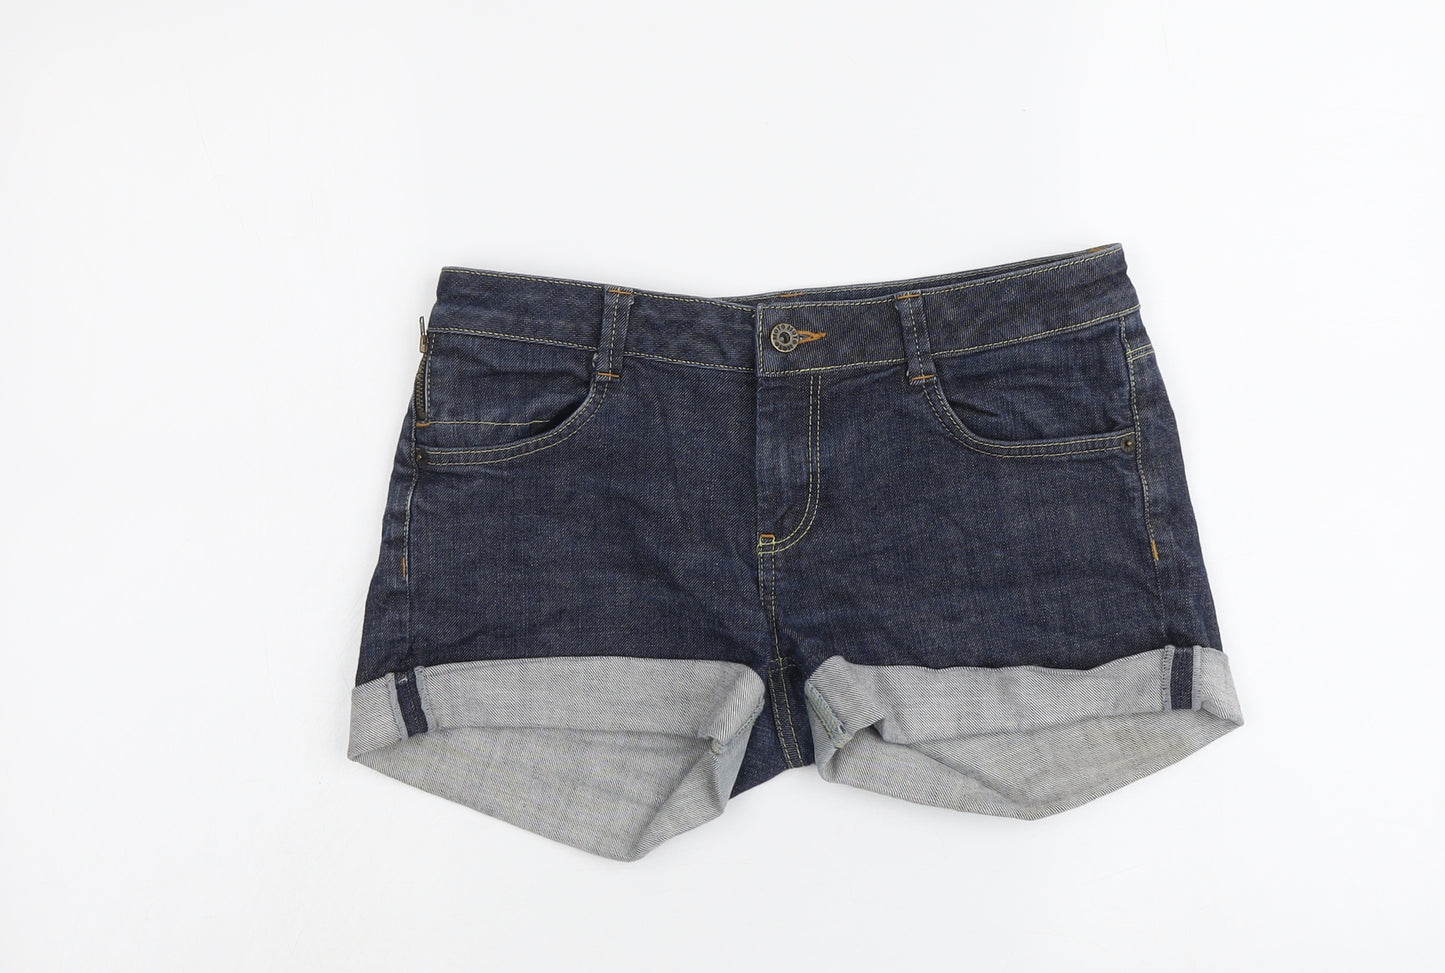 Topshop Womens Blue Cotton Hot Pants Shorts Size 10 L3 in Regular Button